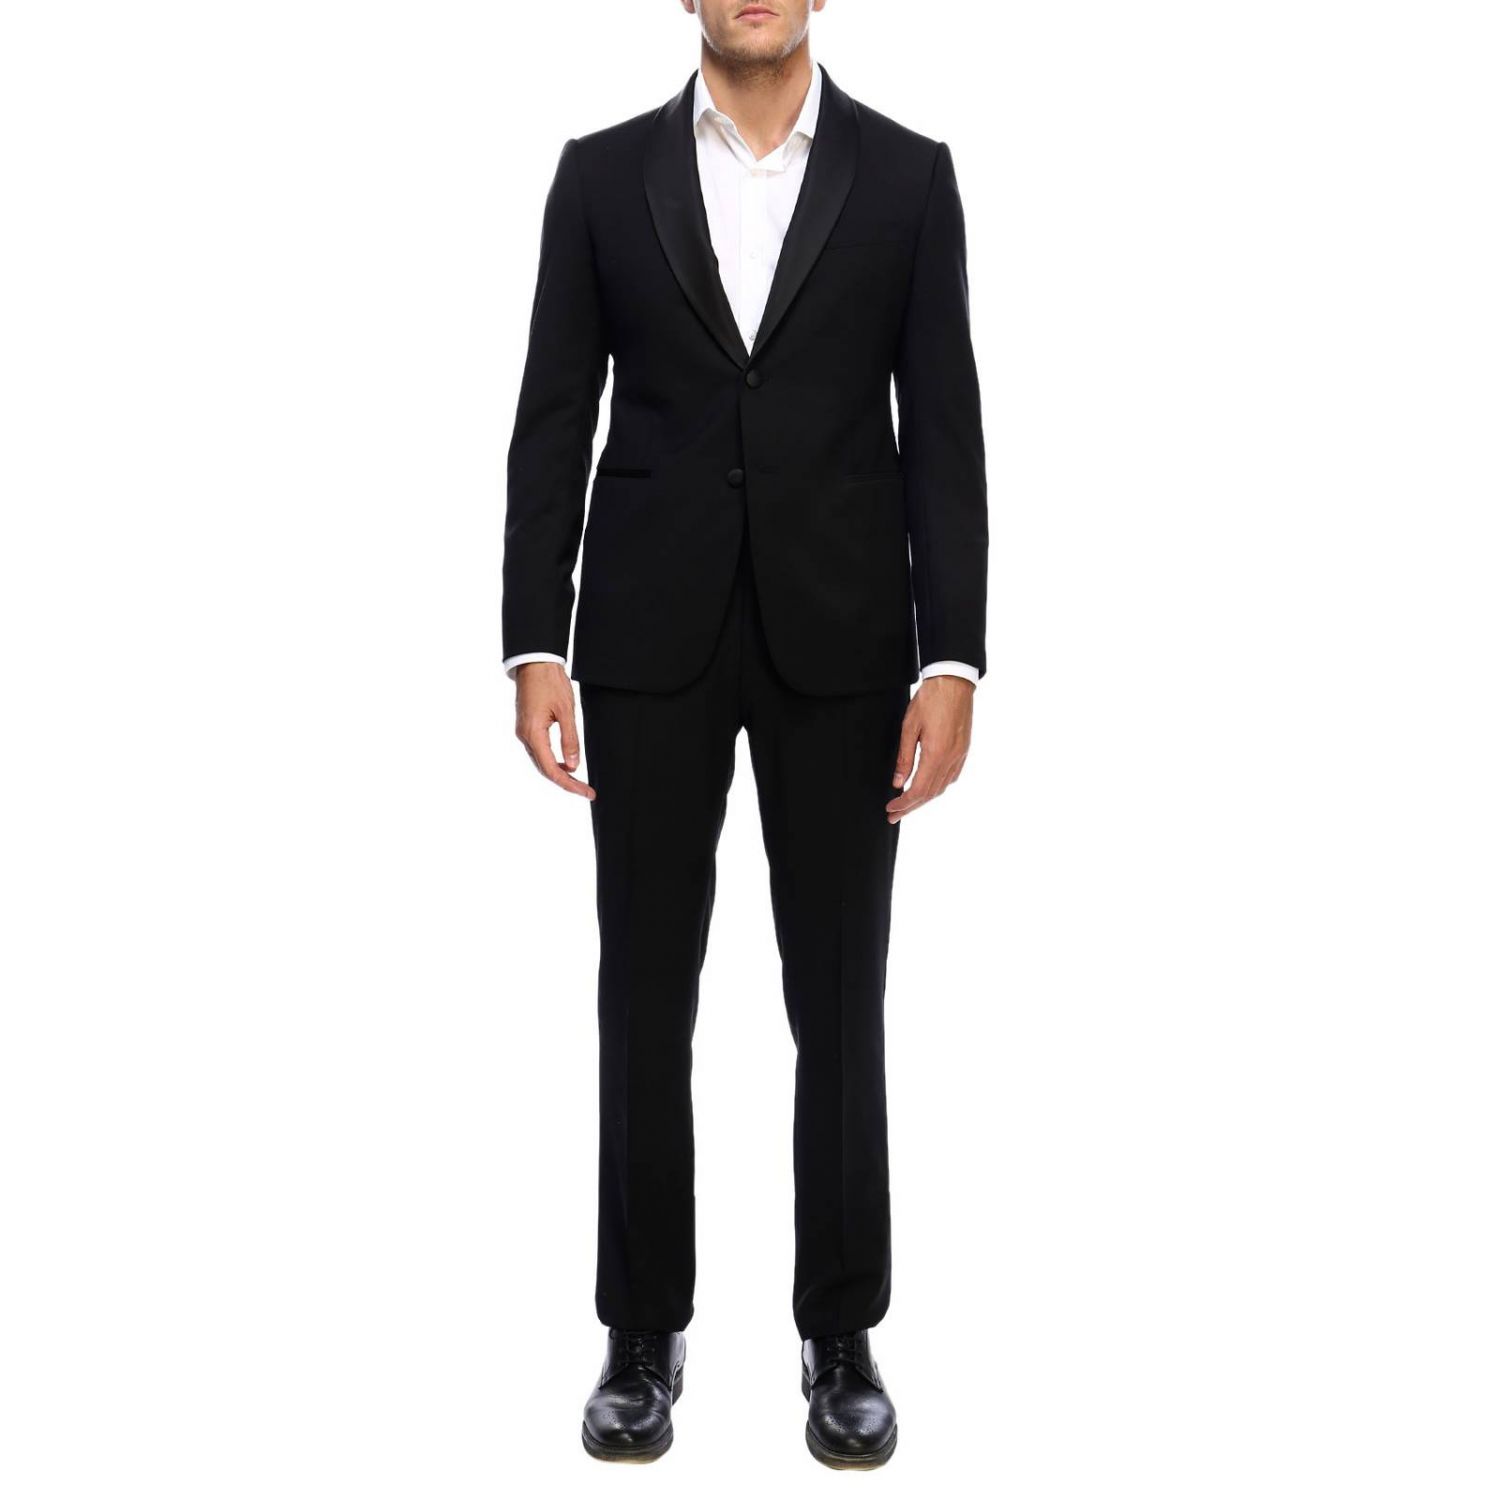 Emporio Armani Outlet: Suit men - Black | Suit Emporio Armani 11VMSP ...